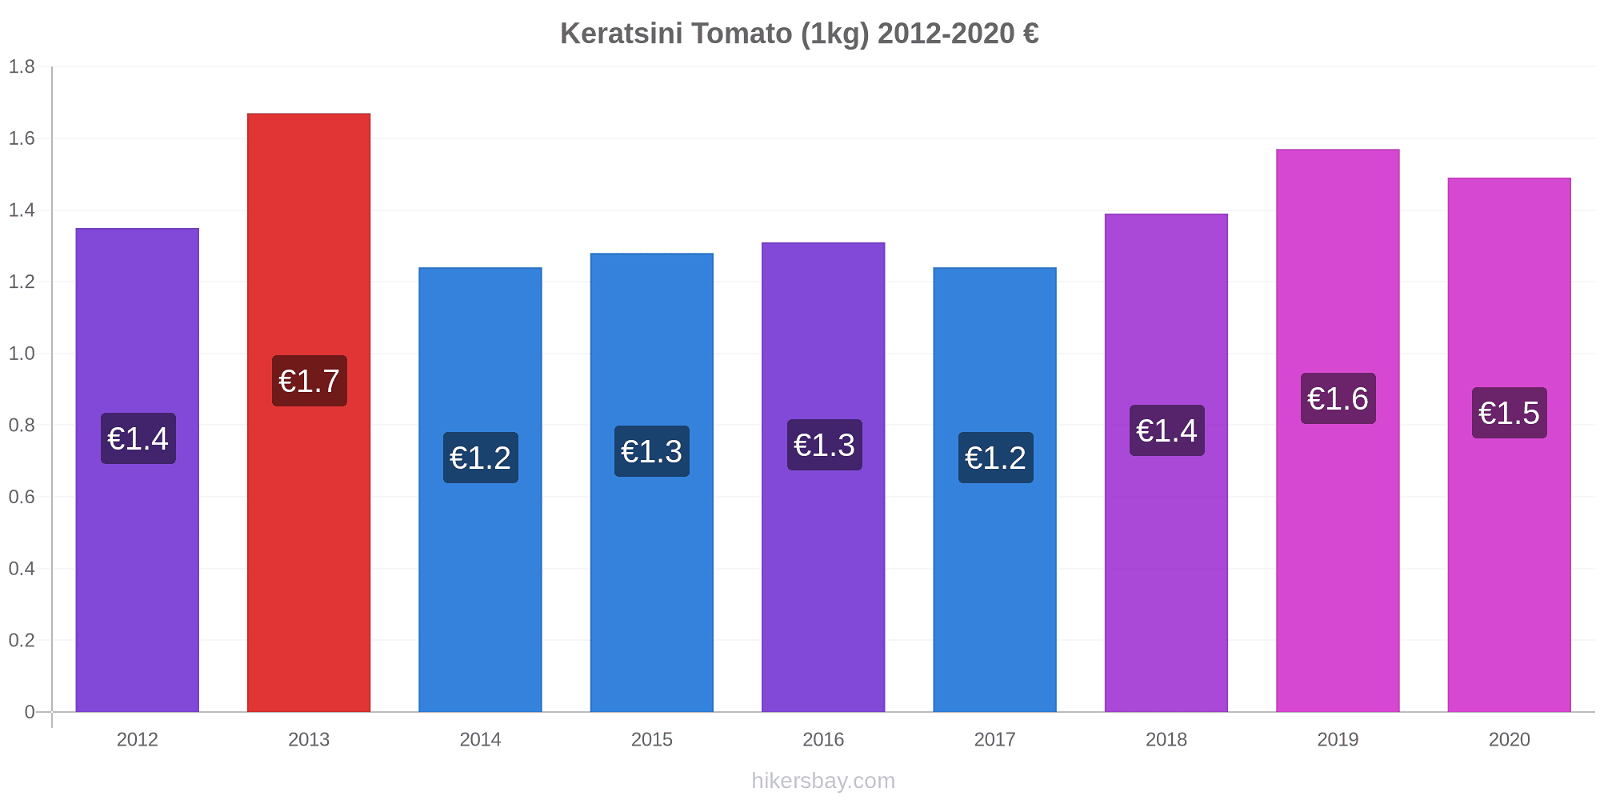 Keratsini price changes Tomato (1kg) hikersbay.com